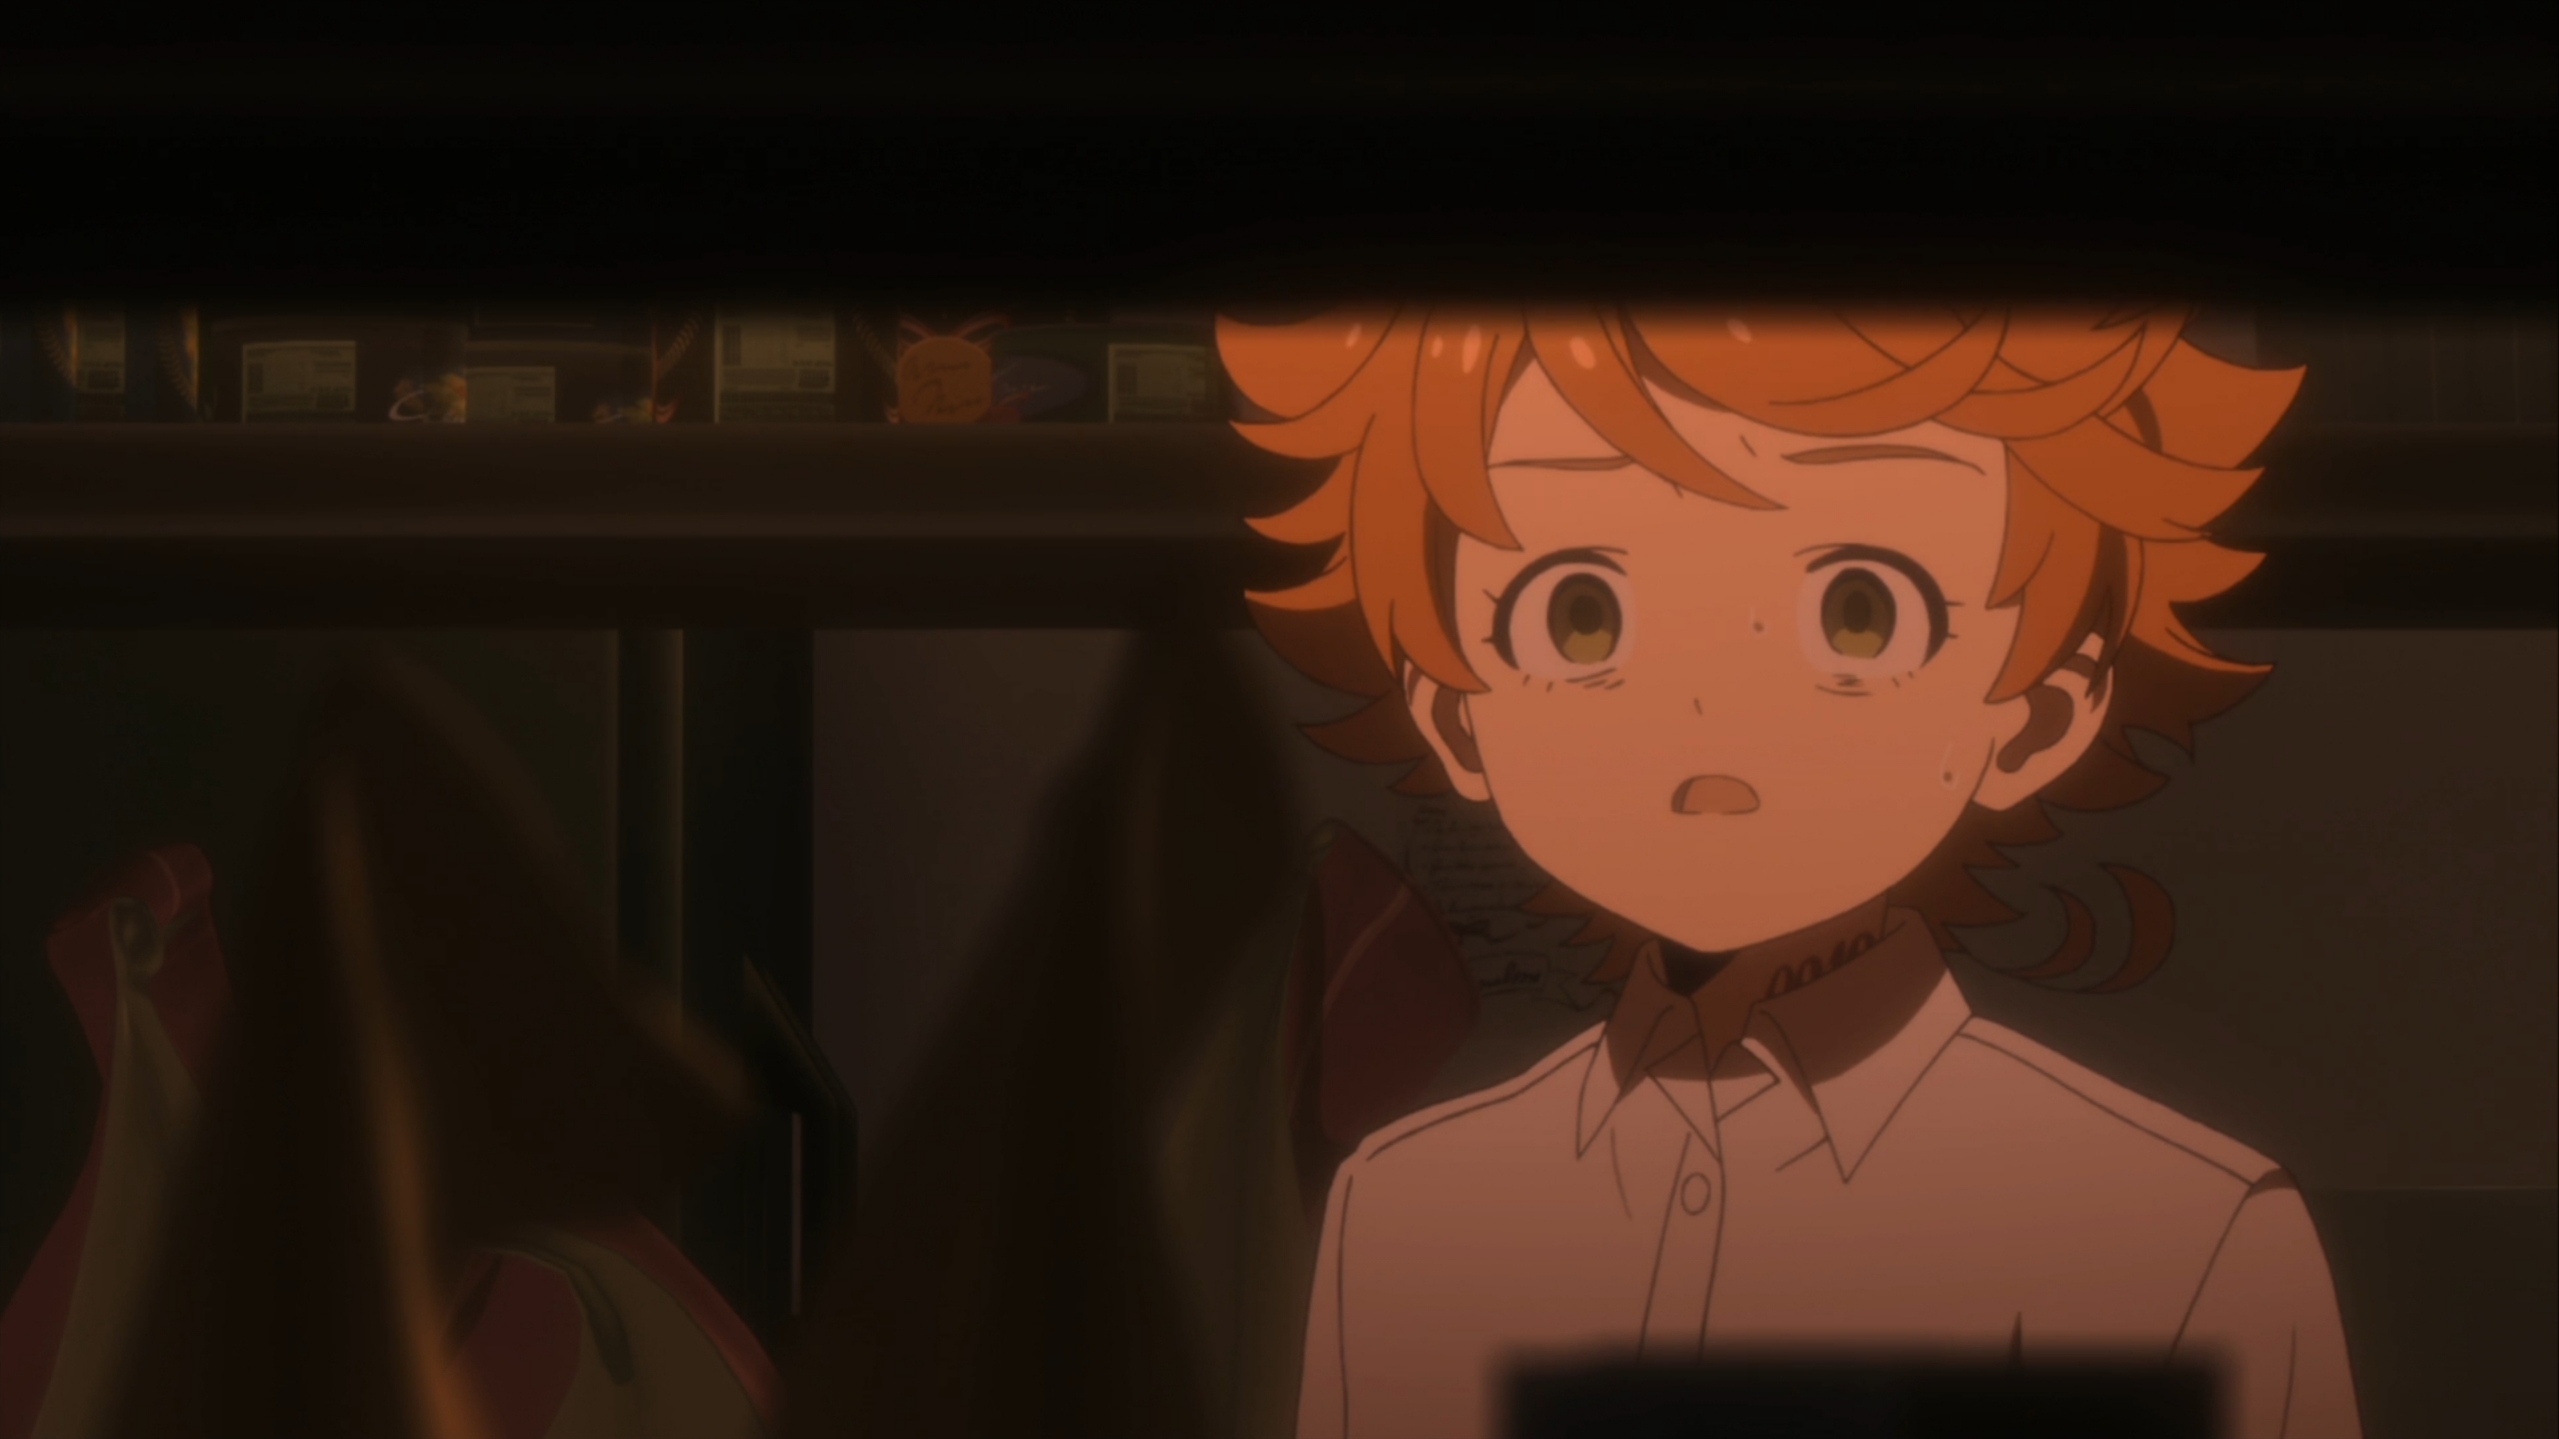 Episode 3 - The Promised Neverland Season 2 - Anime News Network